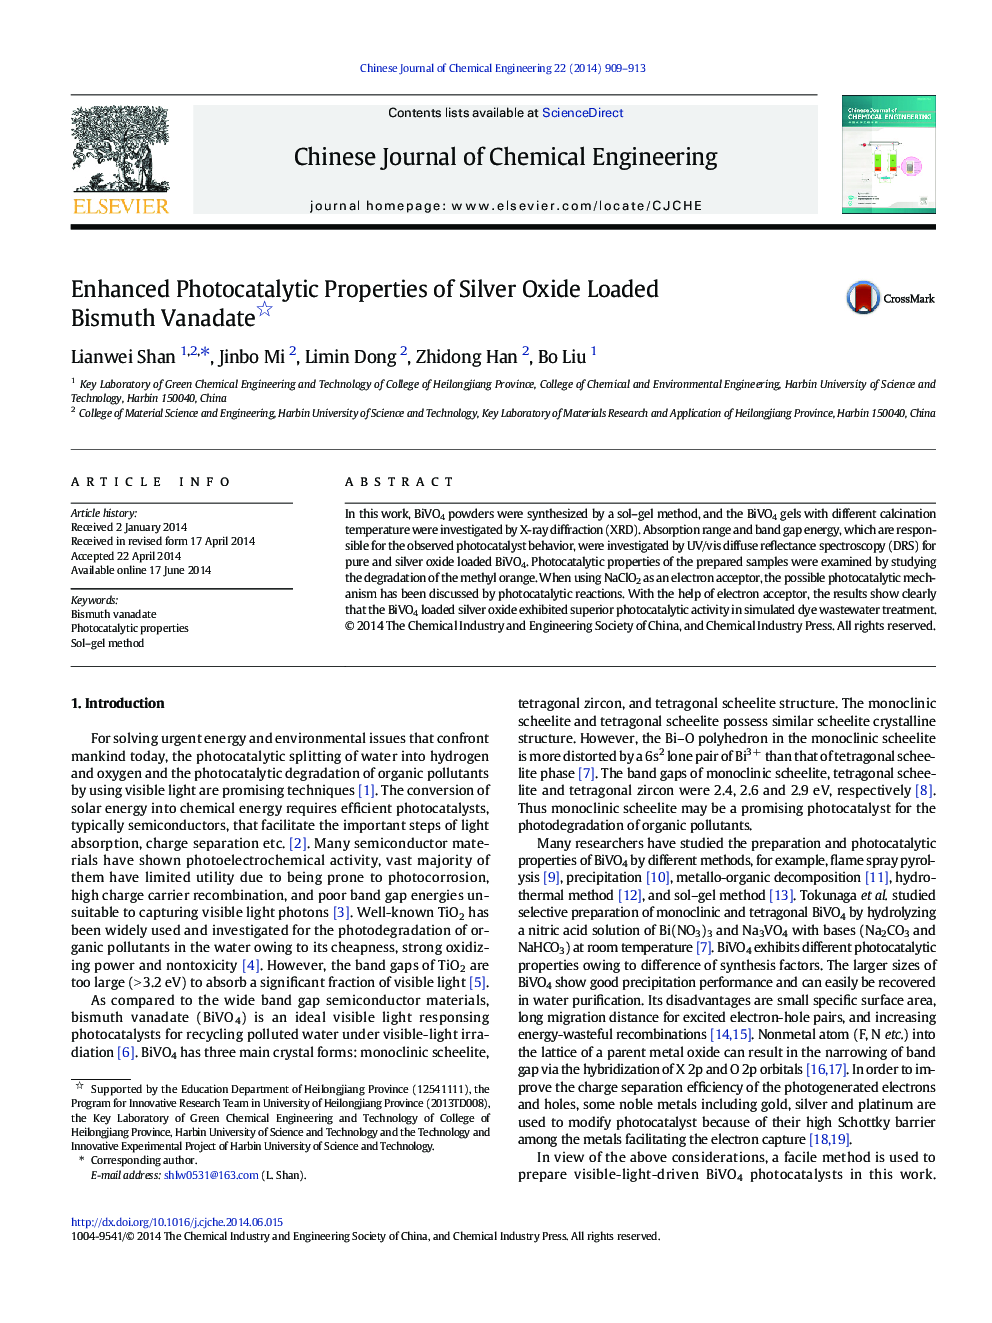 Enhanced Photocatalytic Properties of Silver Oxide Loaded Bismuth Vanadate 